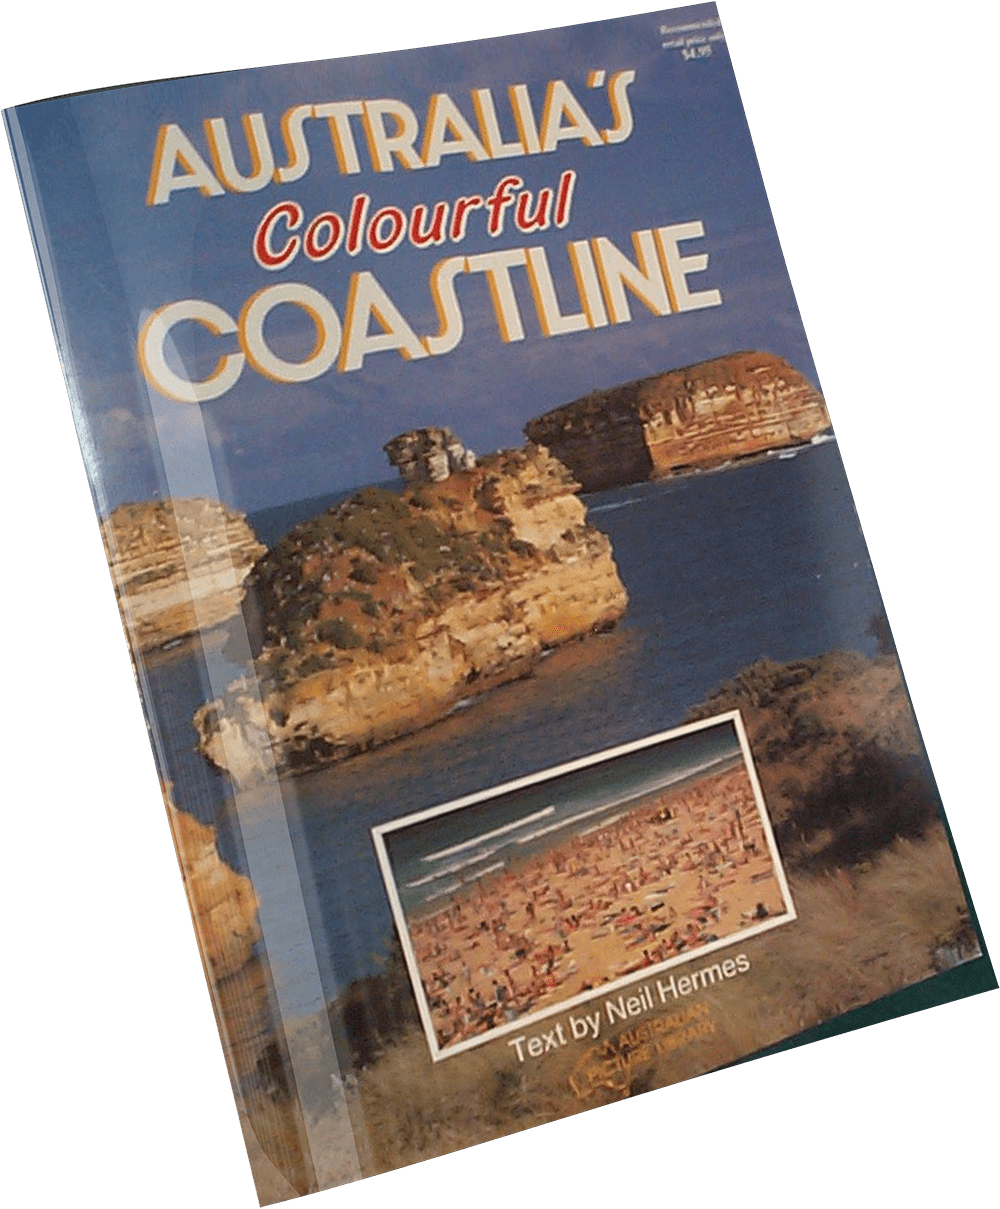 Neil Hermes Book: Australia’s Colourful Coastline